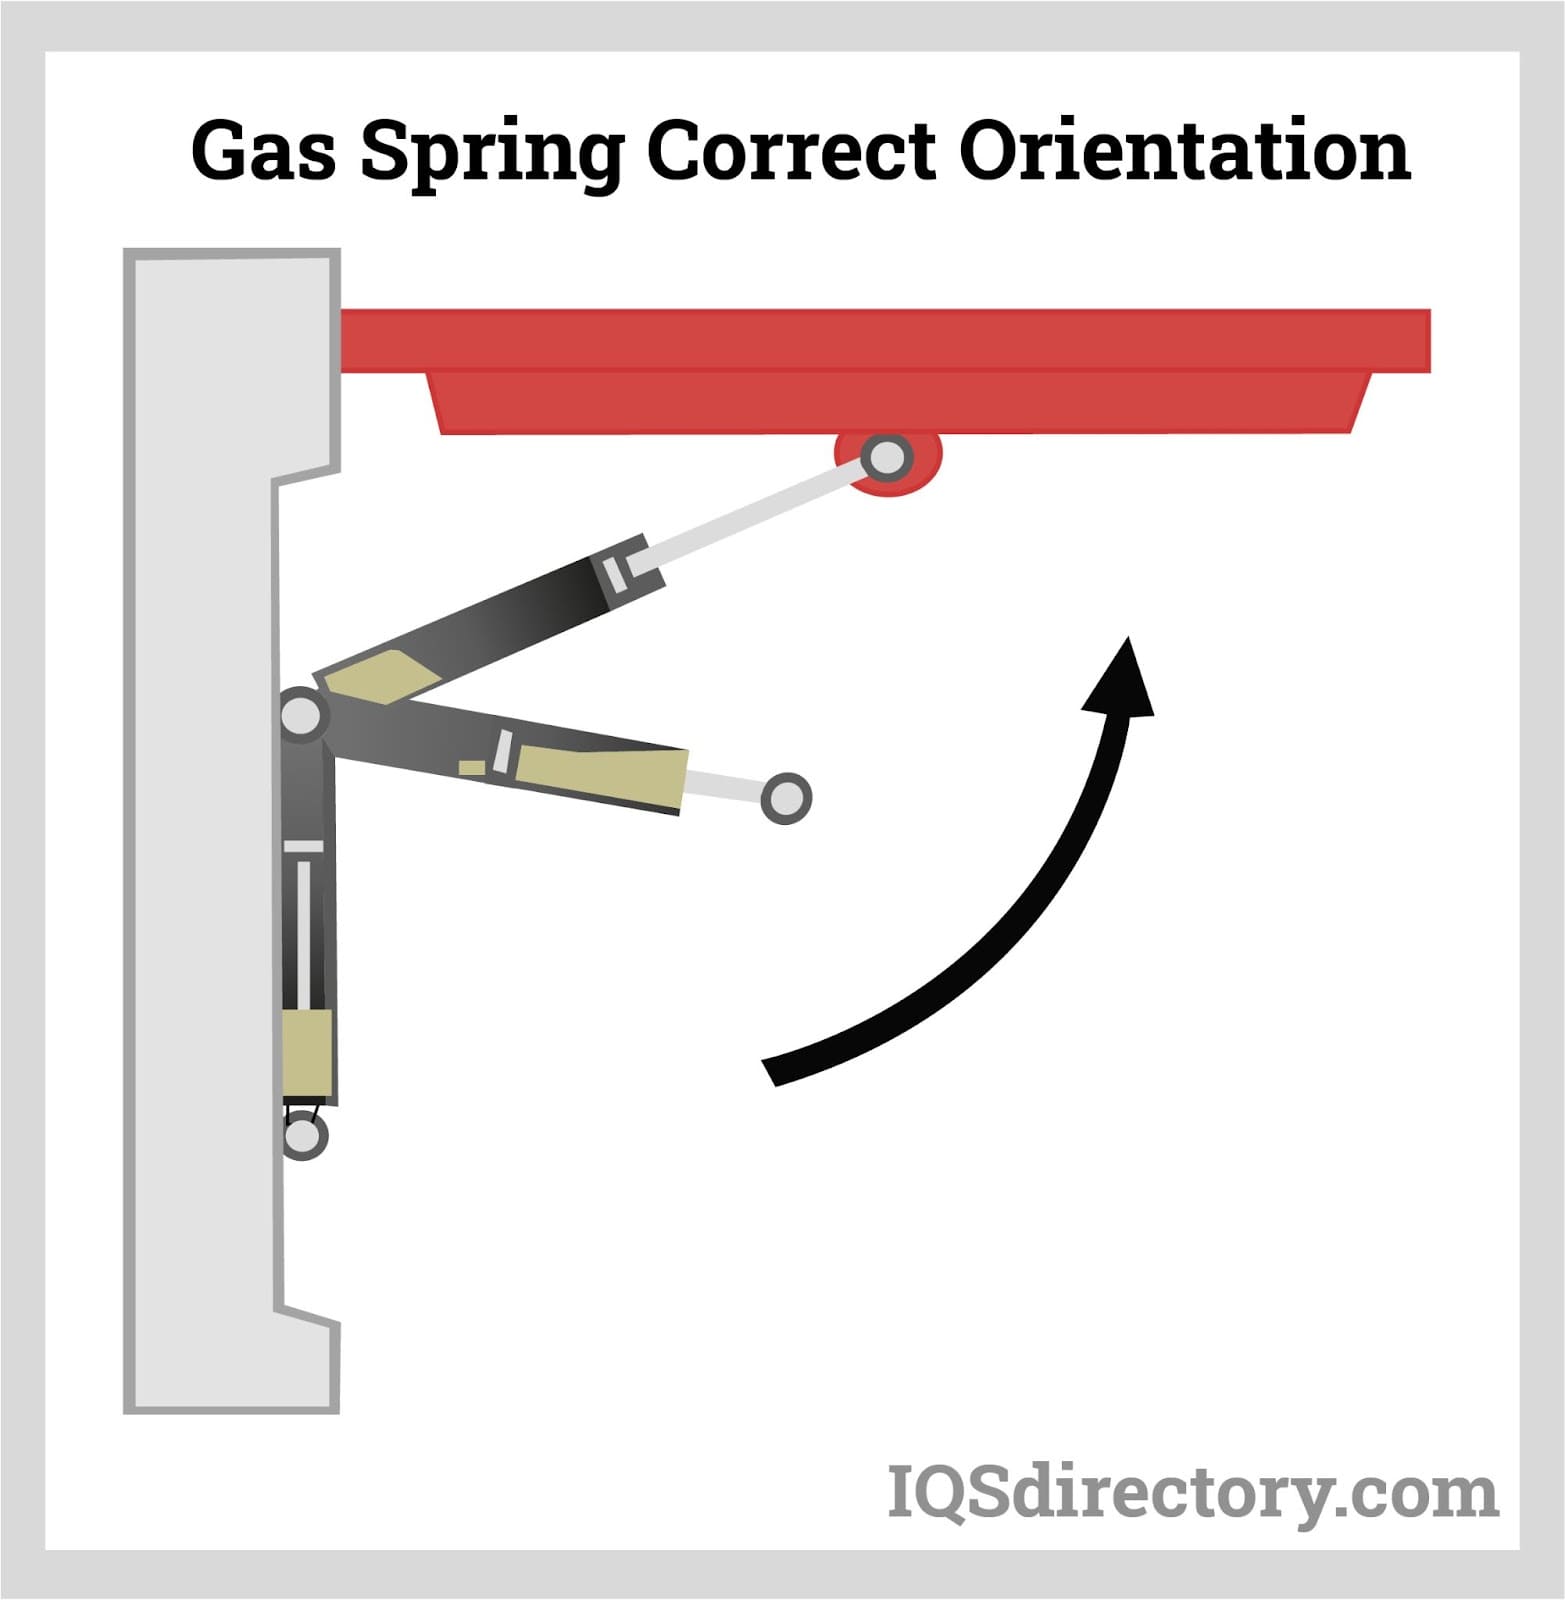 Gas Spring Correct Orientation